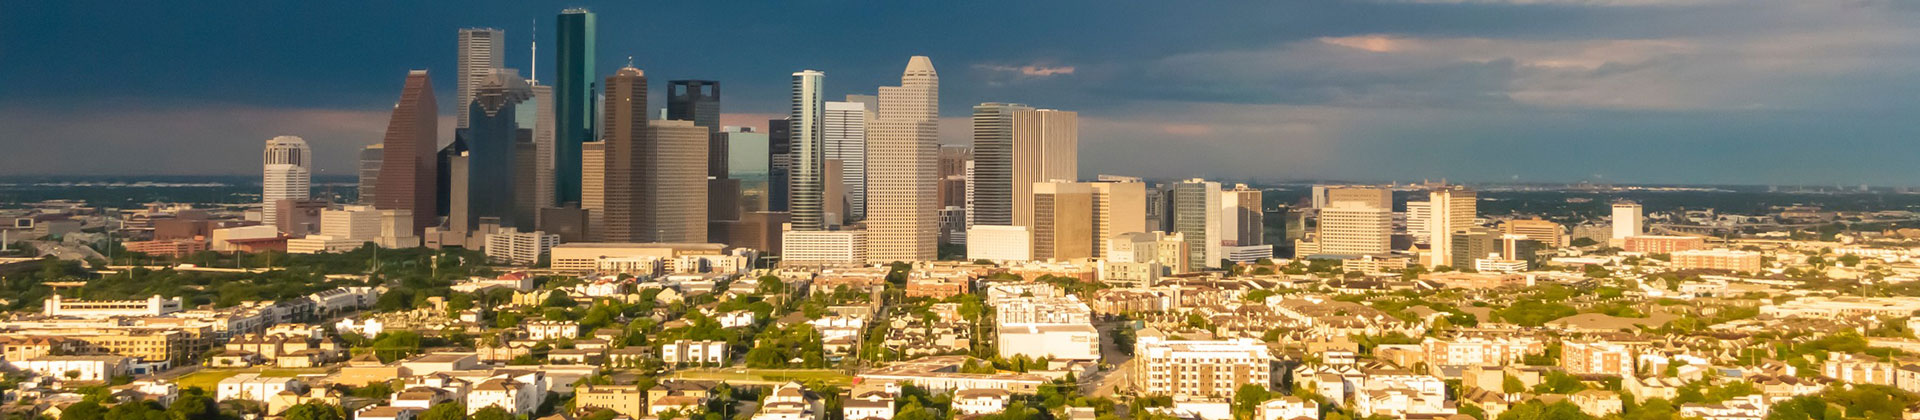 Expansive View of Houston, Texas